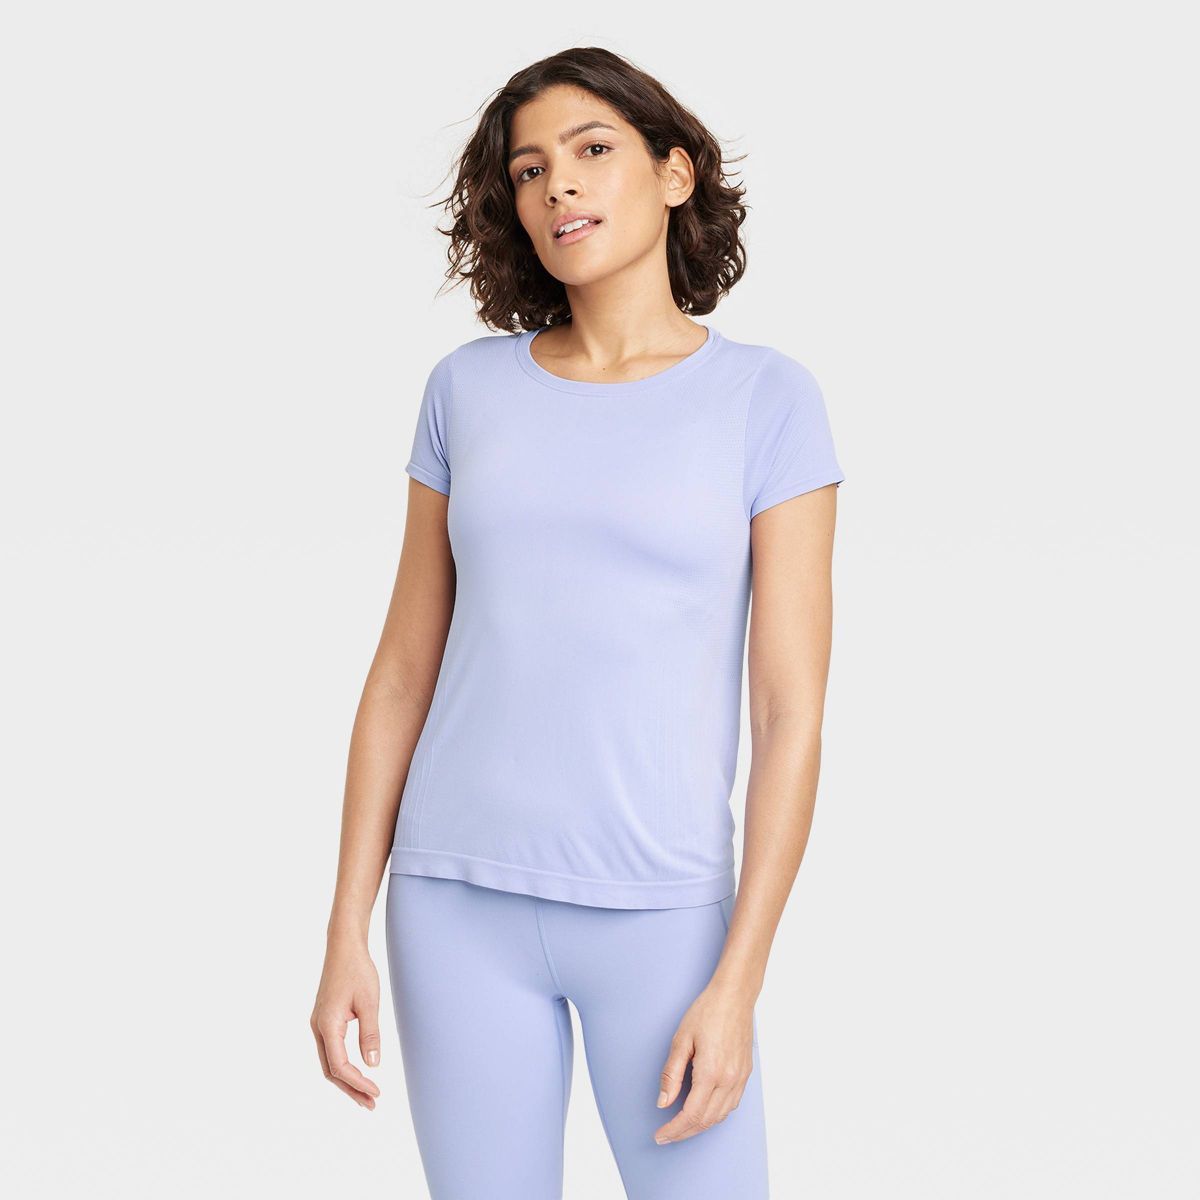 Women's Seamless Short Sleeve Shirt - All In Motion™ | Target